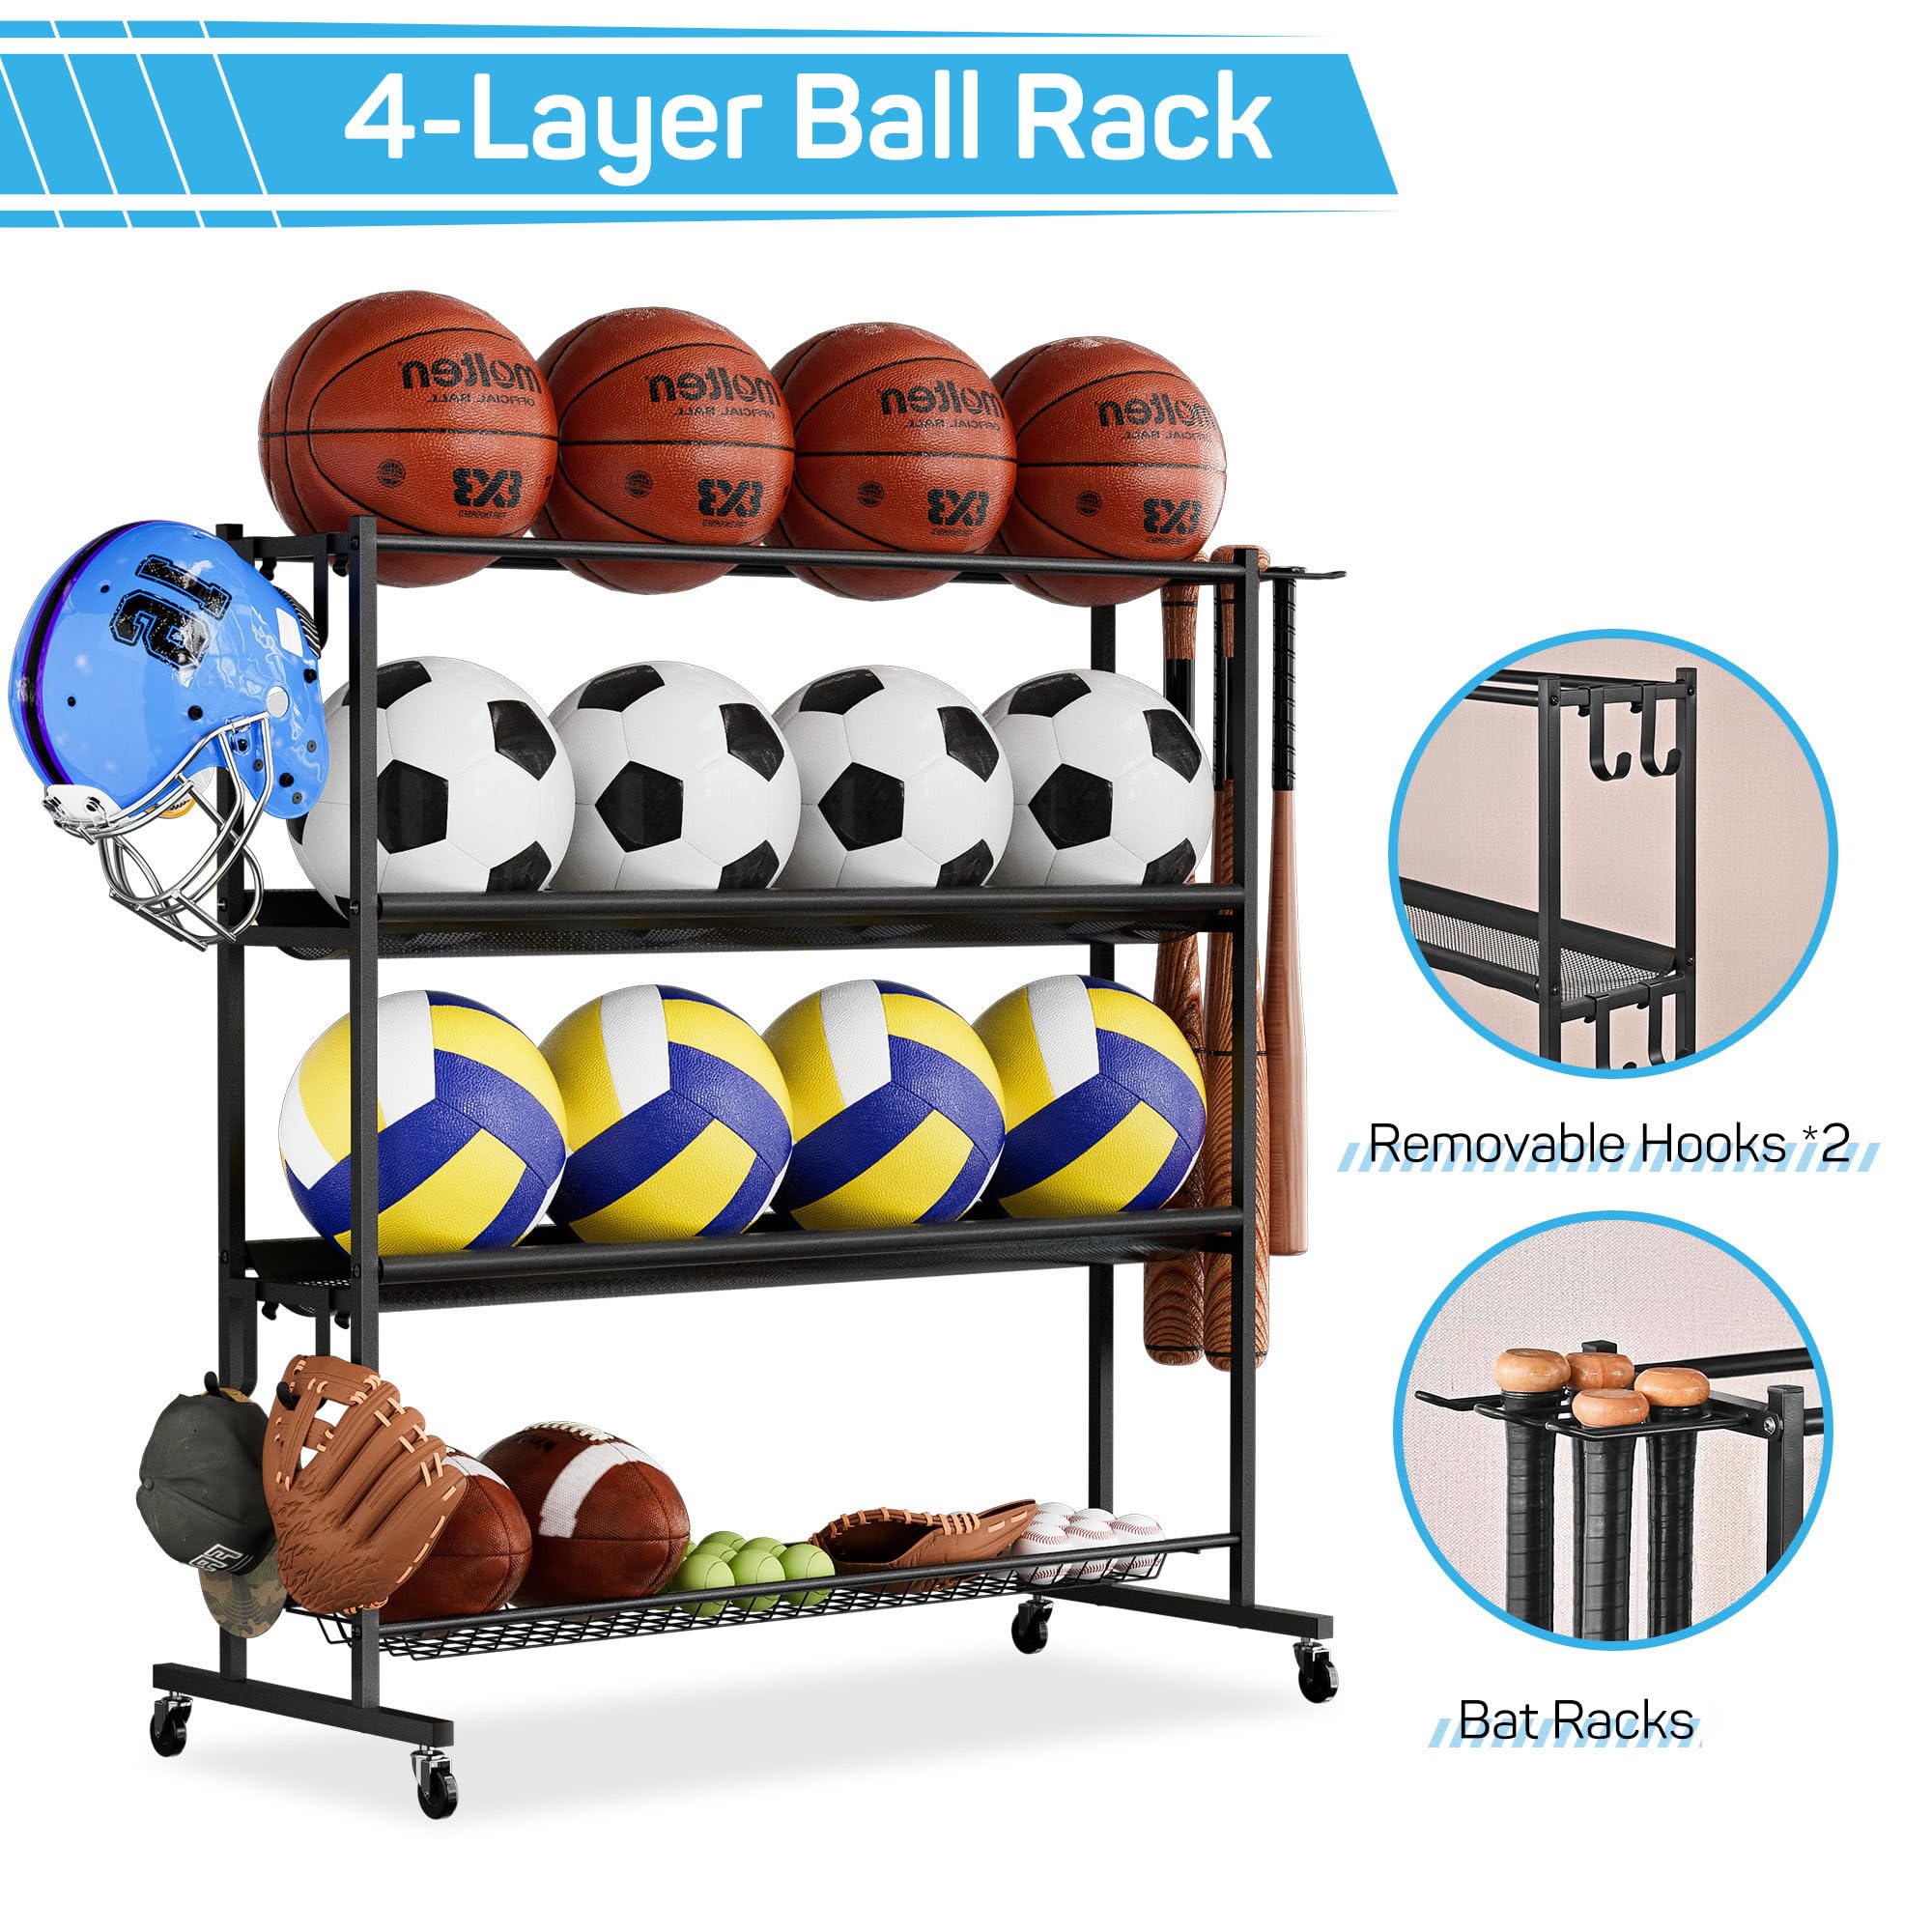 Mythinglogic Basketball Rack, Sports Equipment Storage with Wheels